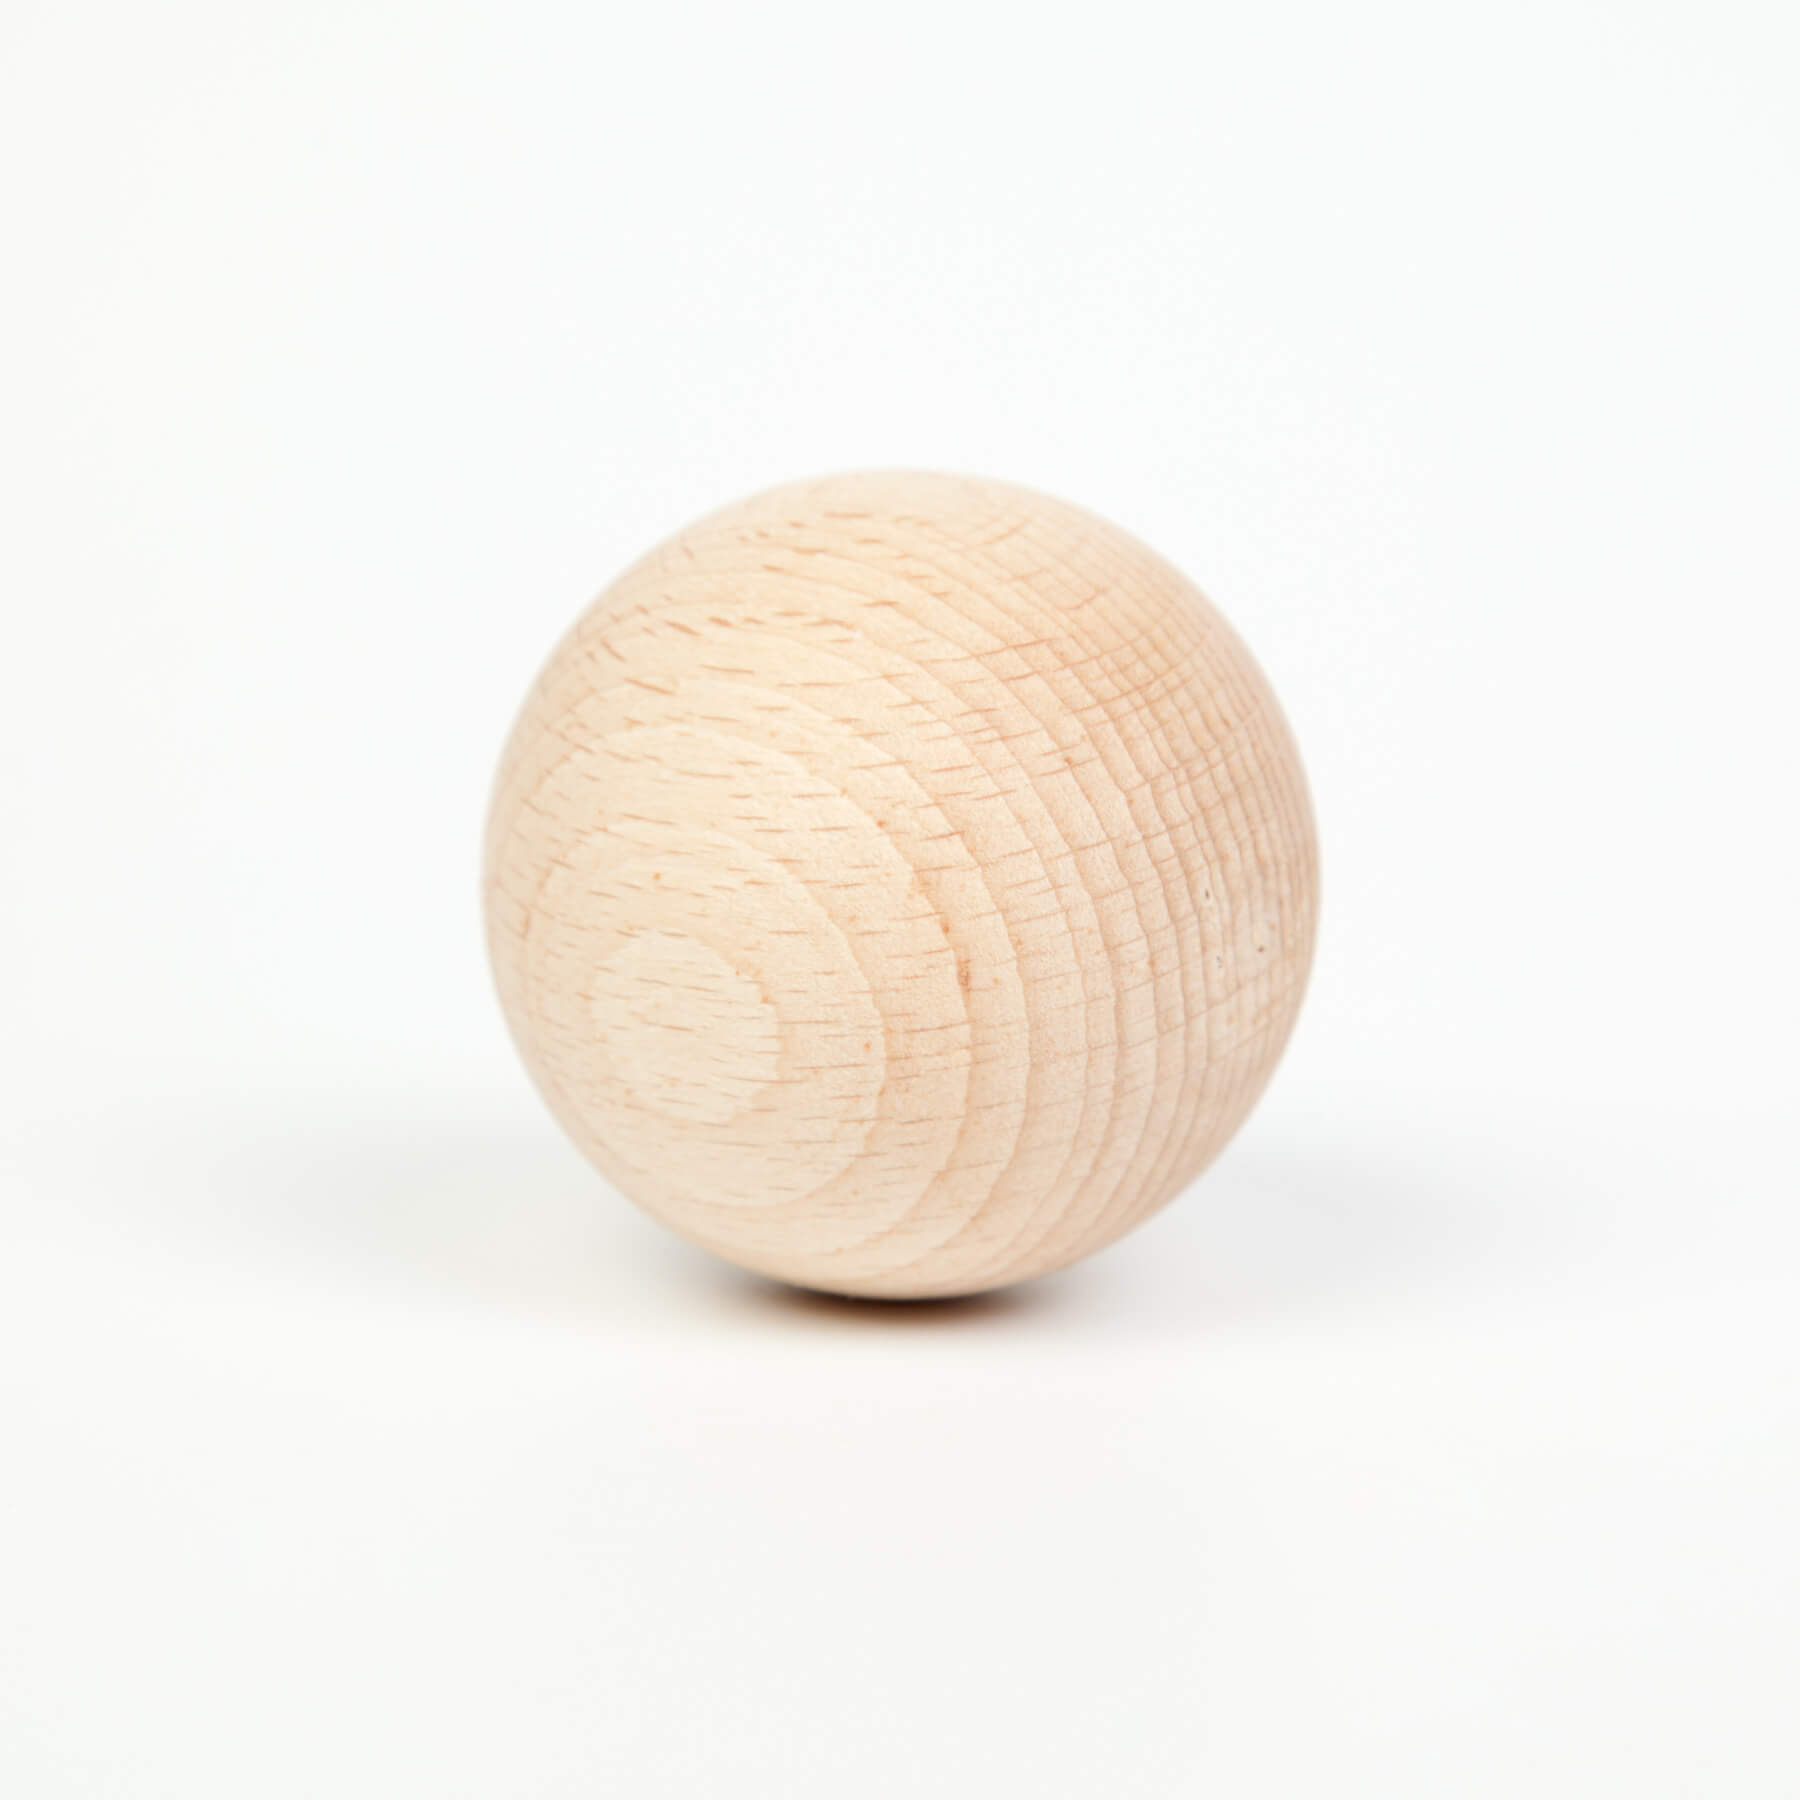 © Joguines Grapat: 6 Natural Wooden Balls